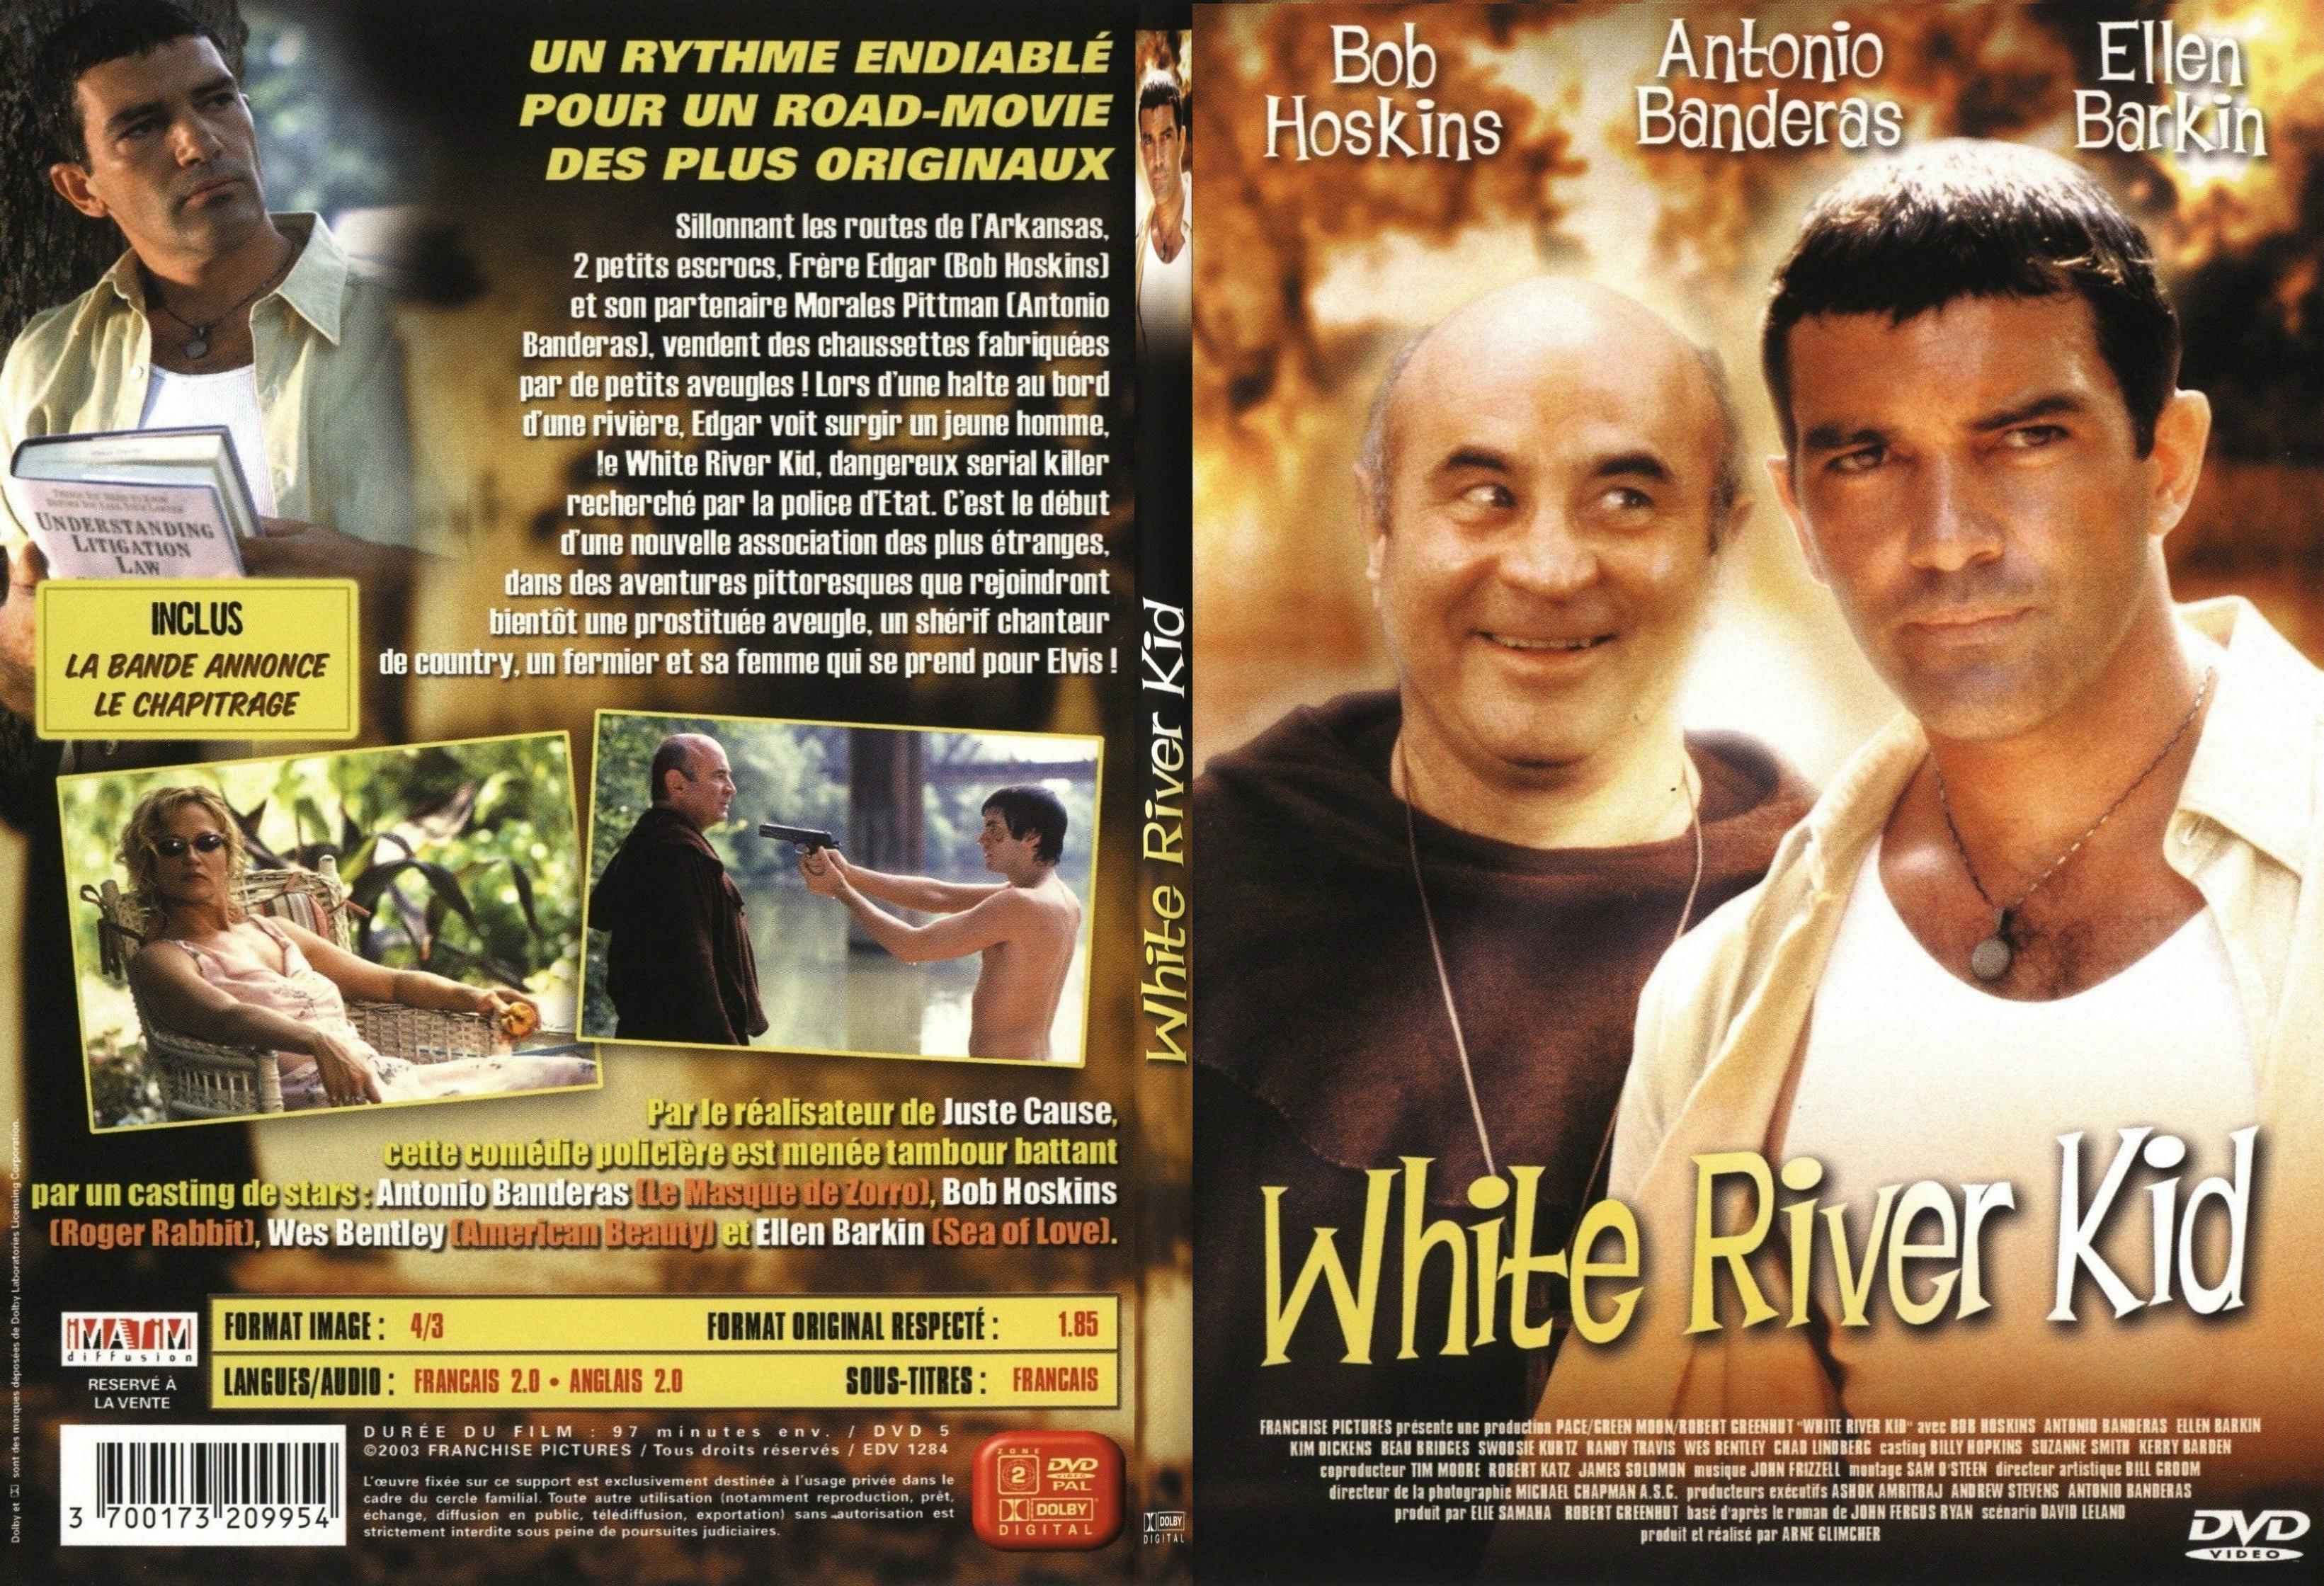 Jaquette DVD White river kid - SLIM